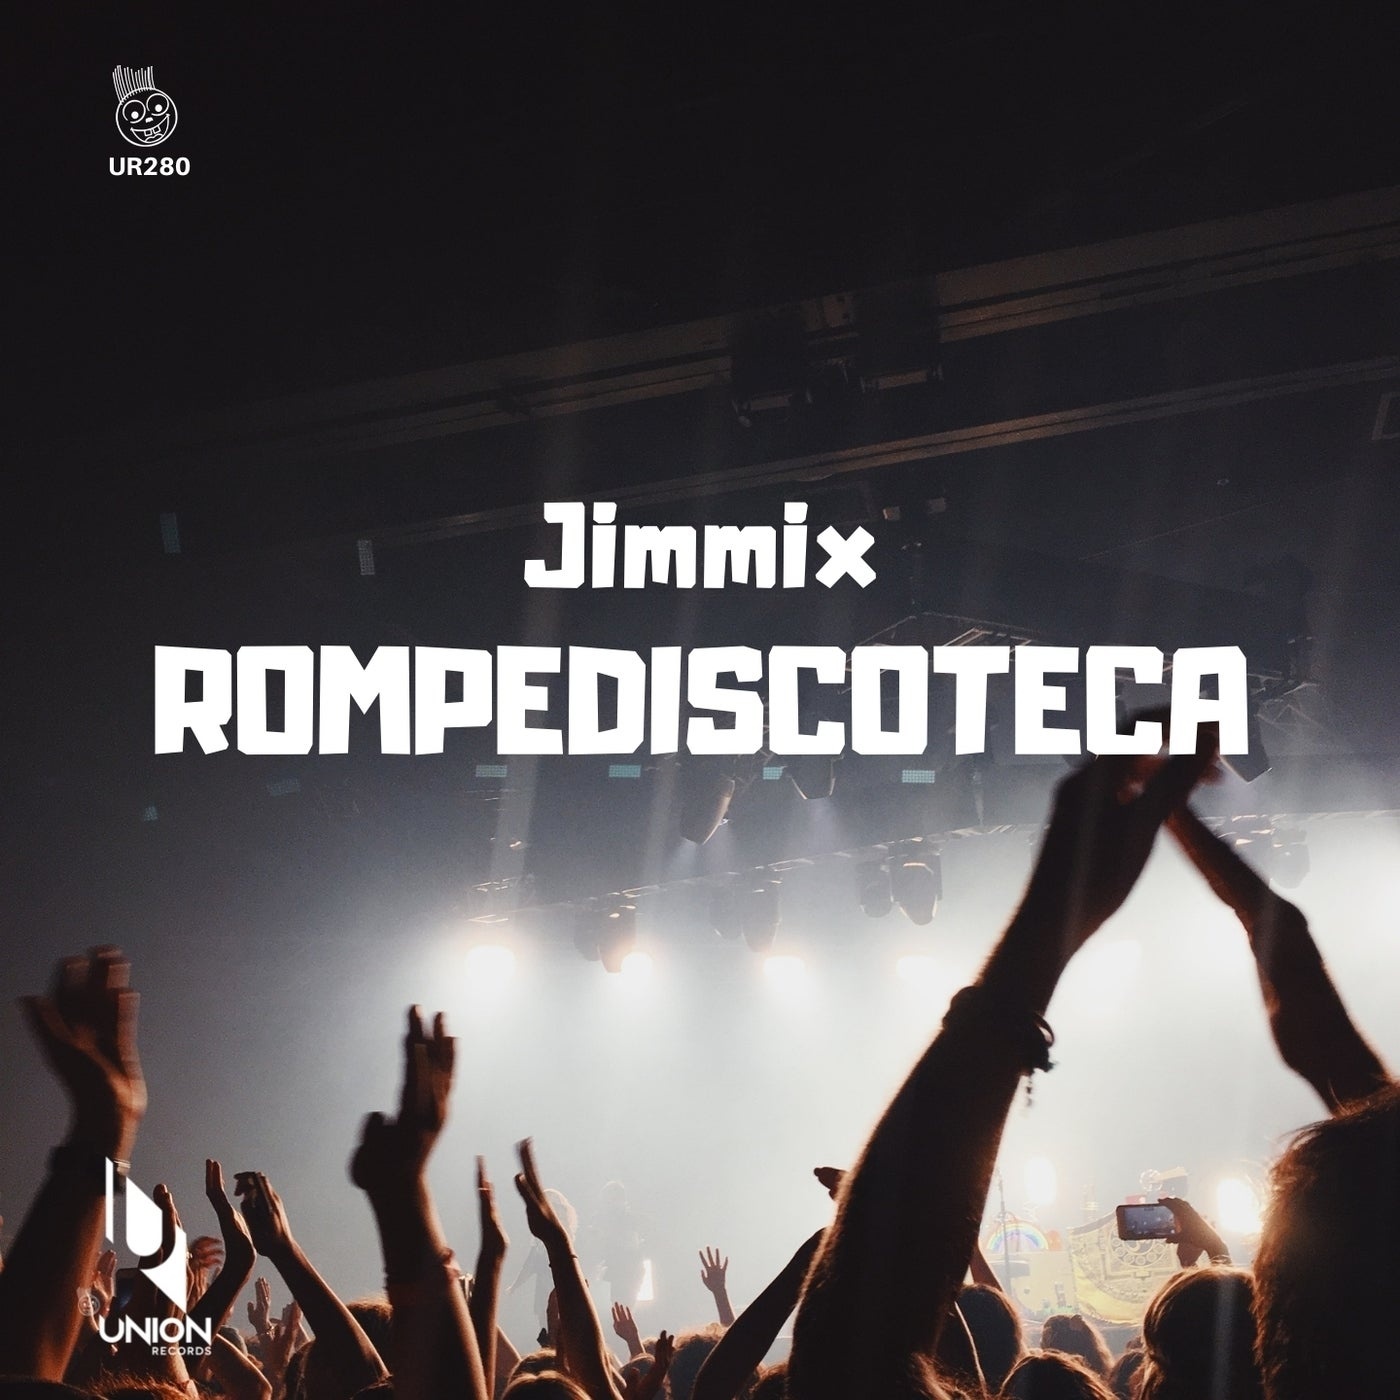 Jimmix - Rompediscoteca [UR280]